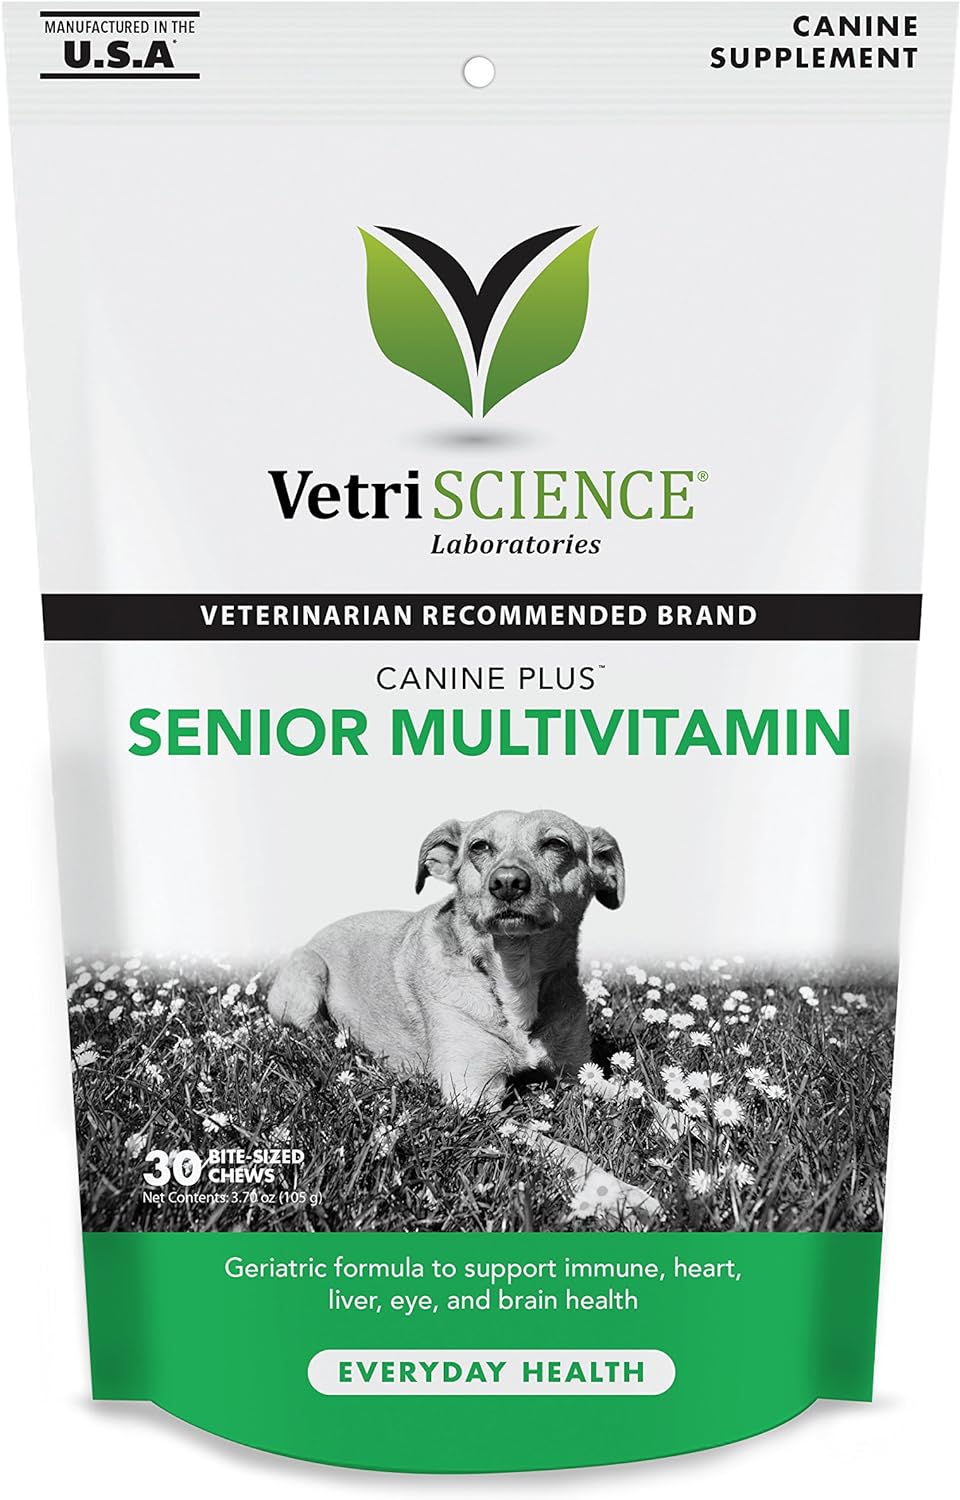 VETRISCIENCE Laboratories - Canine Plus Senior Multi Vitamin for Dogs, 30 Bite-Sized Chews